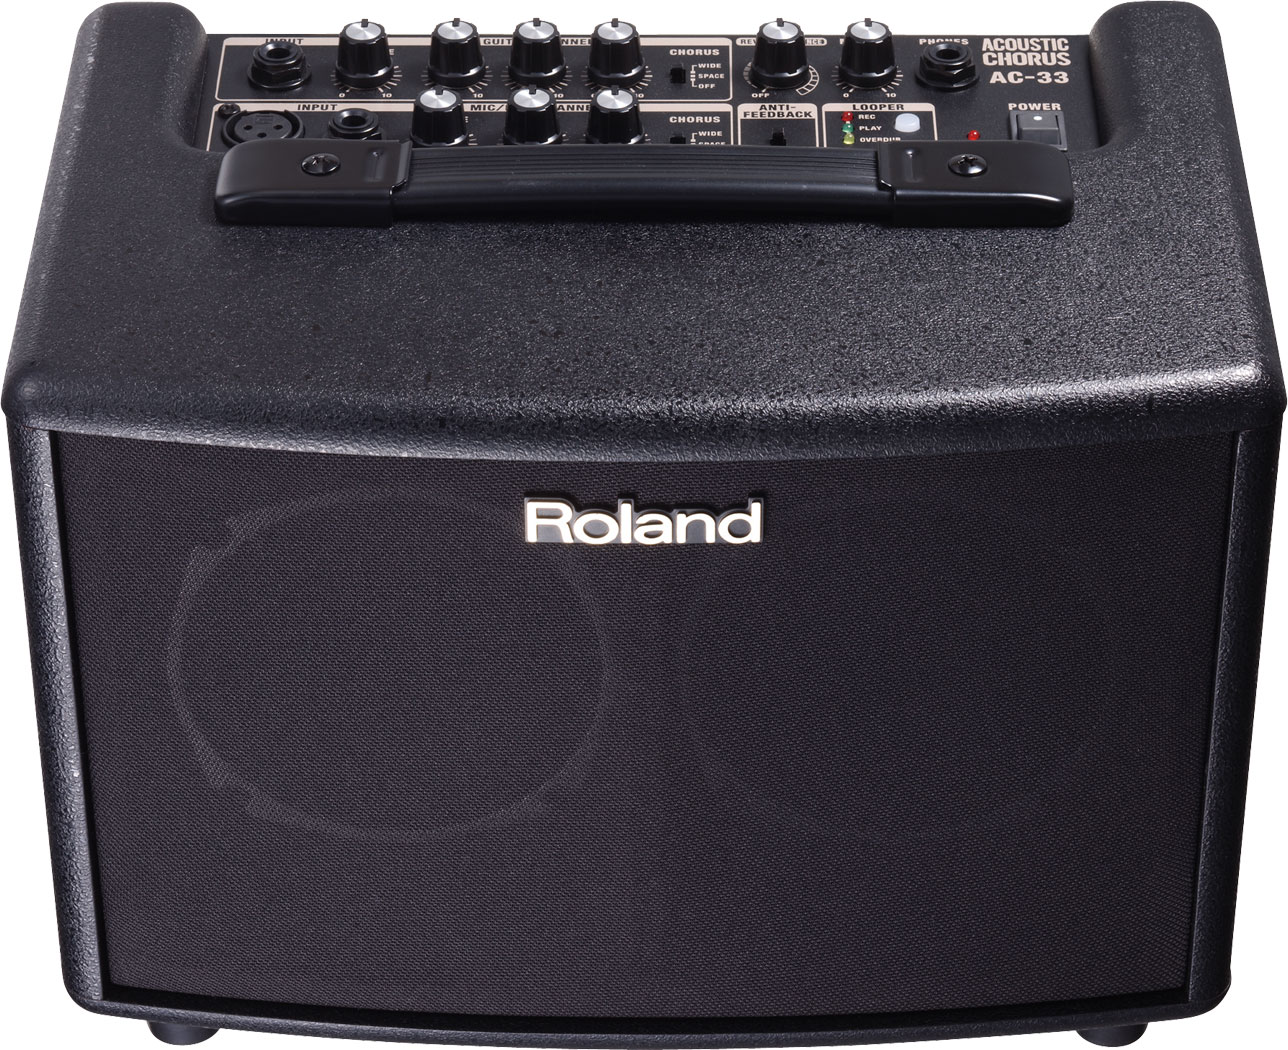 Roland Ac-33 Black - Acoustic guitar combo amp - Variation 4